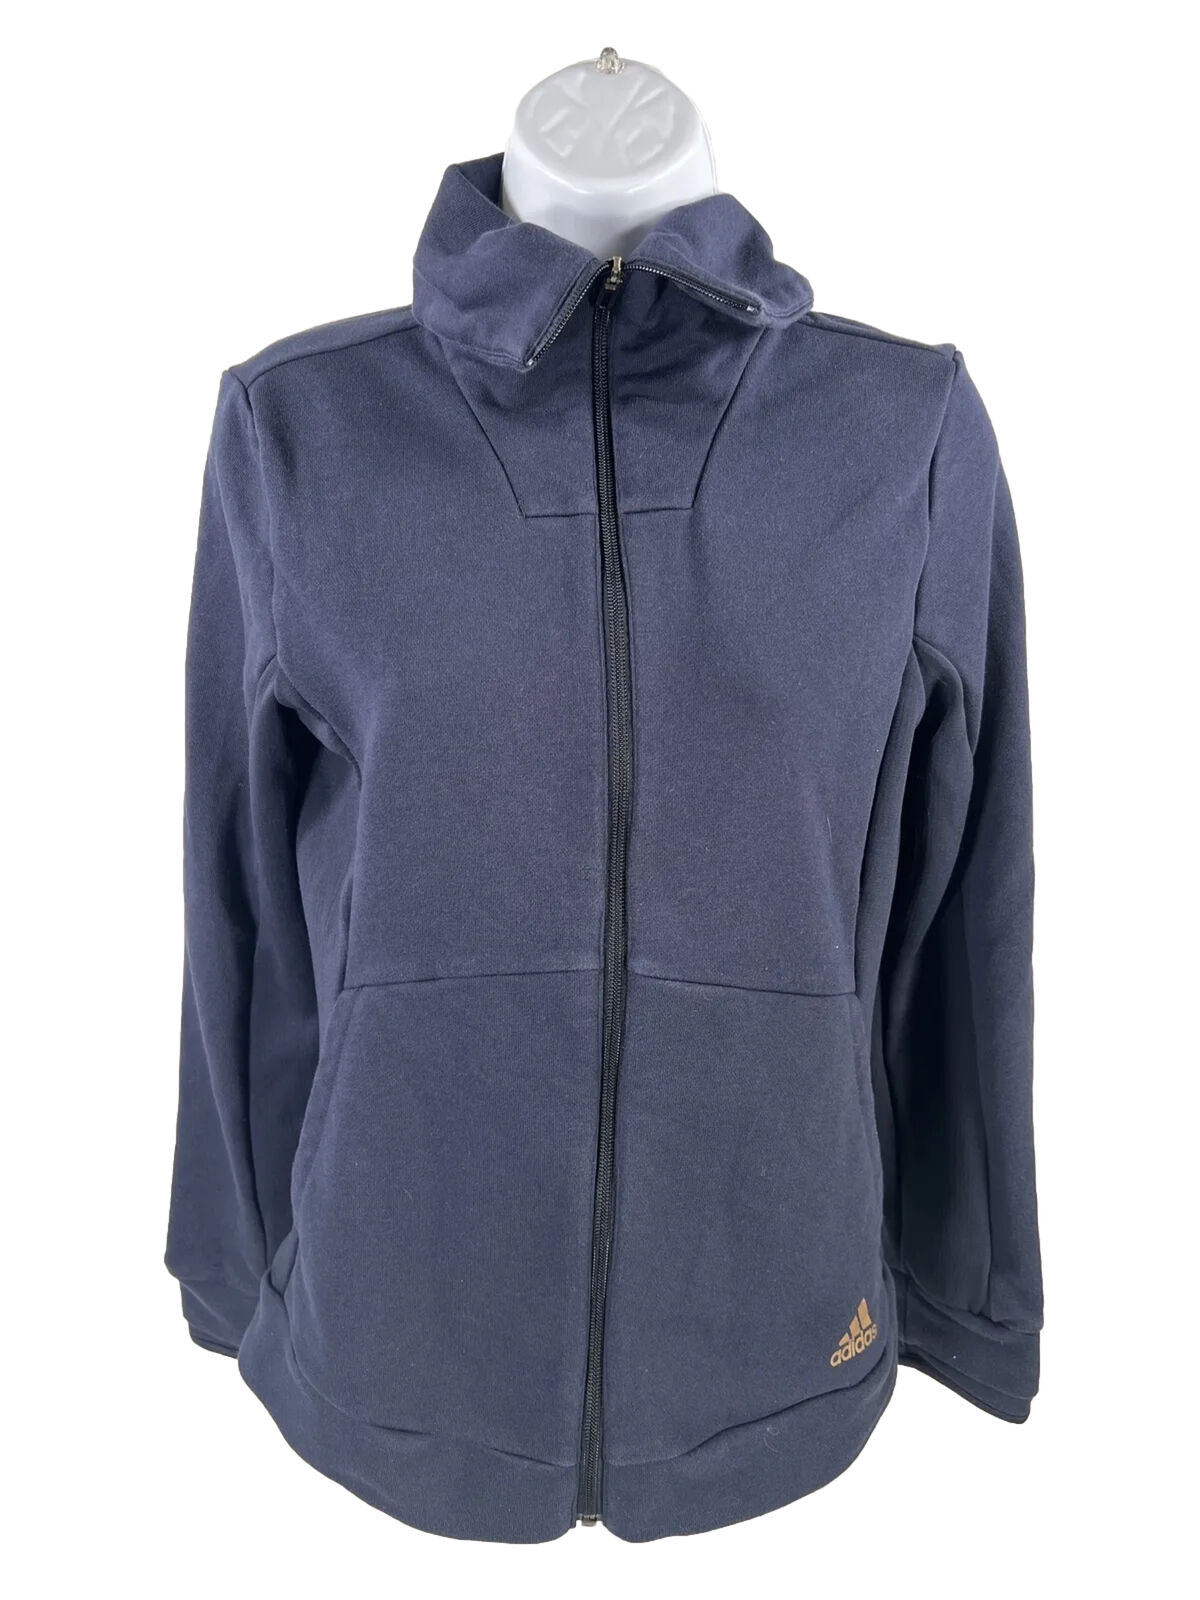 Adidas Women's Navy Blue Long Sleeve Full Zip Sweatshirt - XS